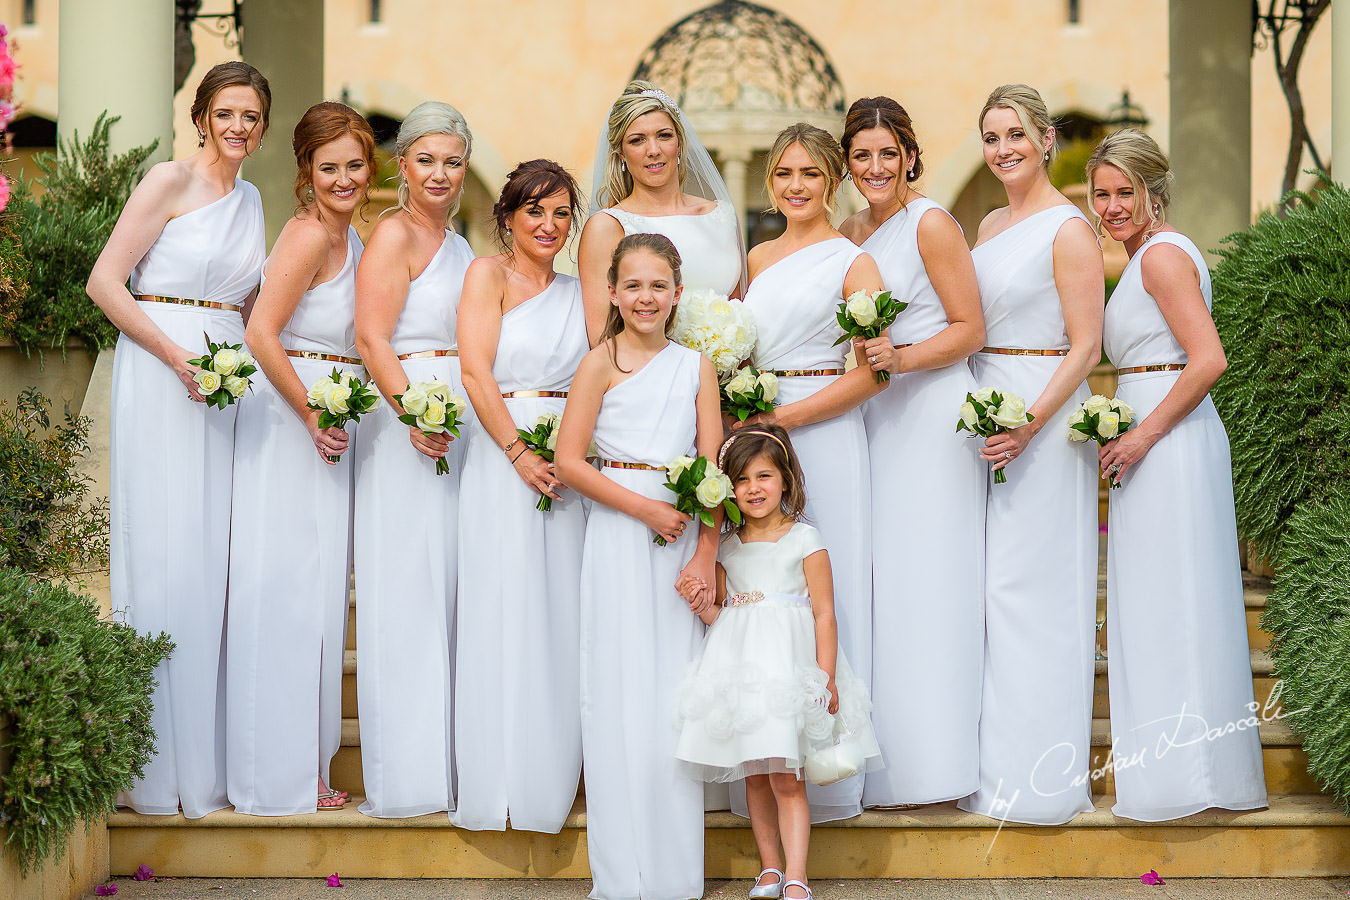 Amazing Wedding Photography at the Elysium Hotel by Cyprus Wedding Photographer Cristian Dascalu.